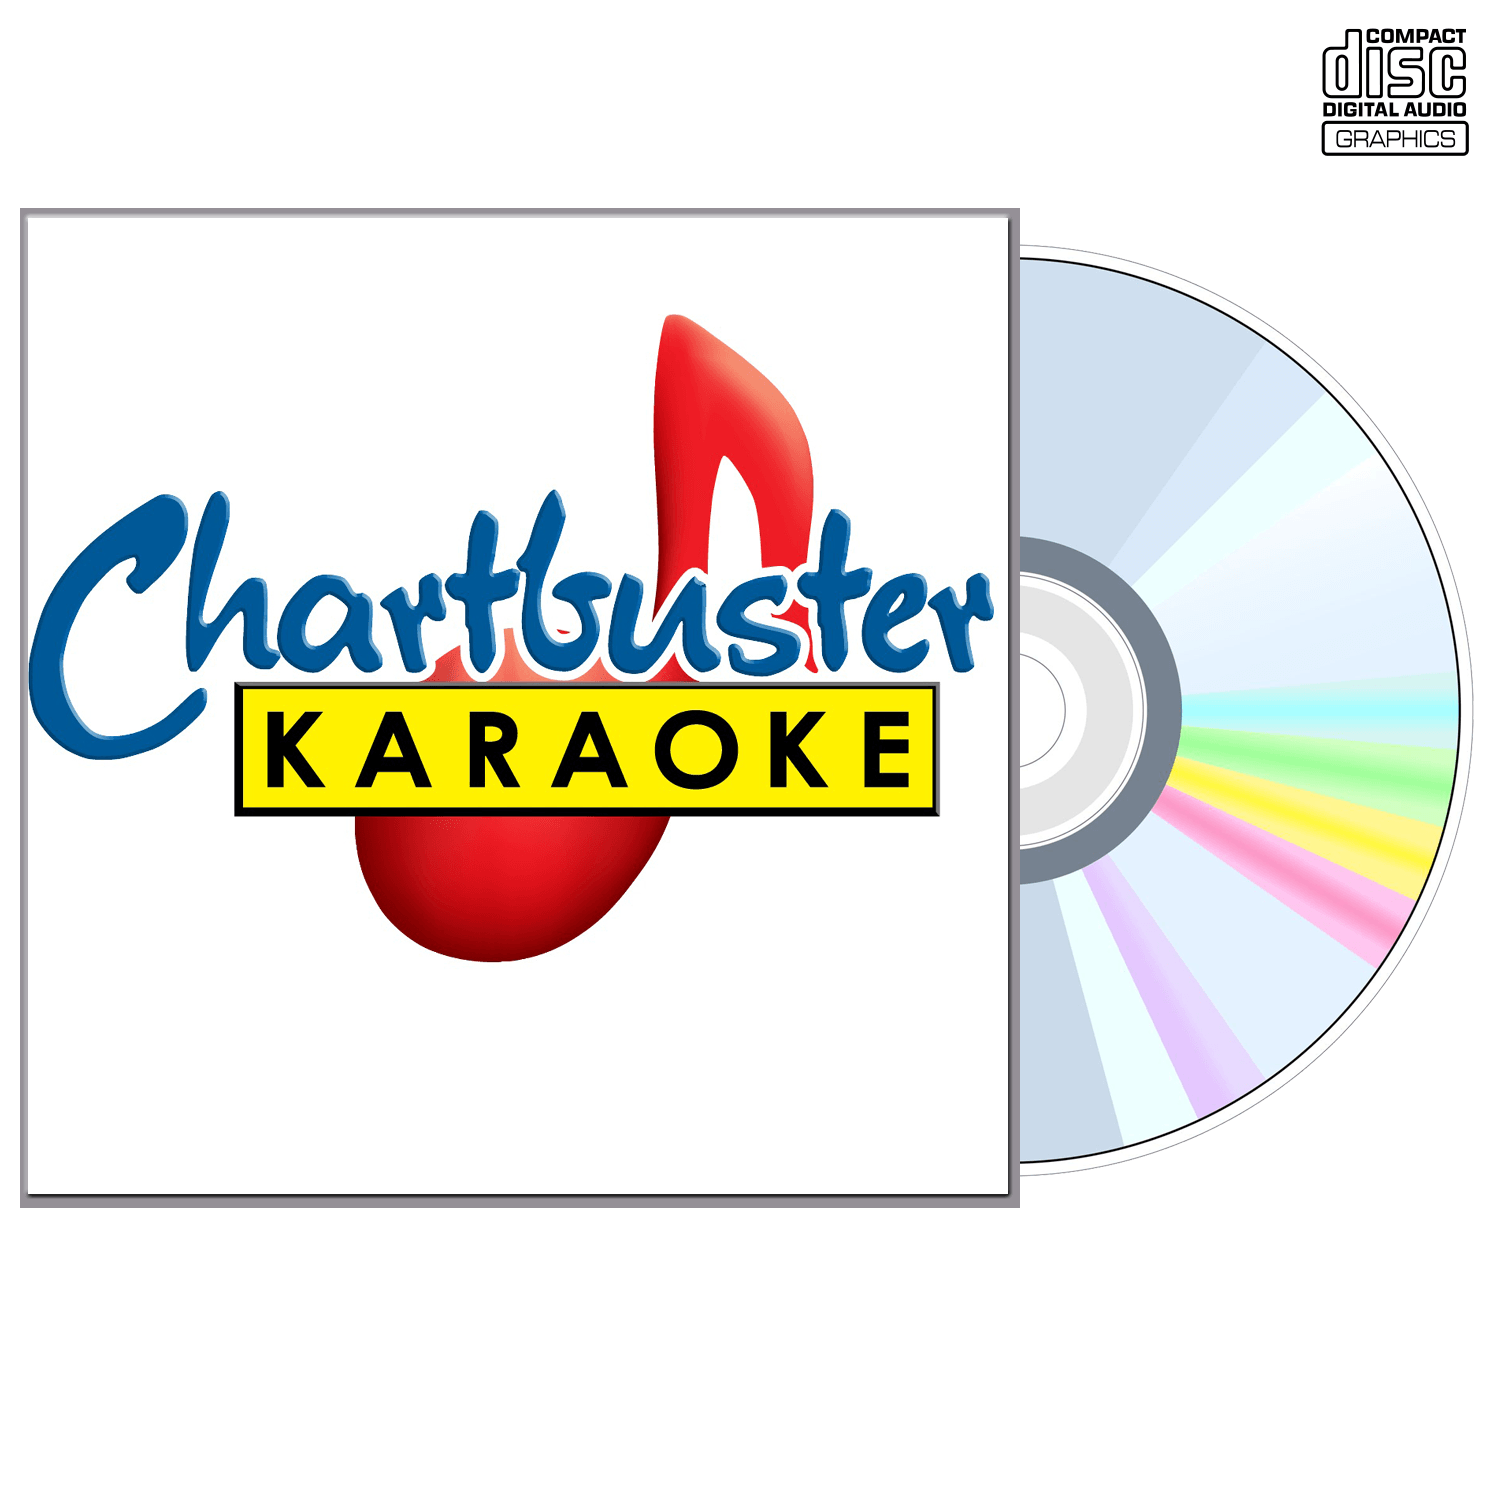 Girl And Girl Duets - CD+G - Chartbuster Karaoke - Karaoke Home Entertainment